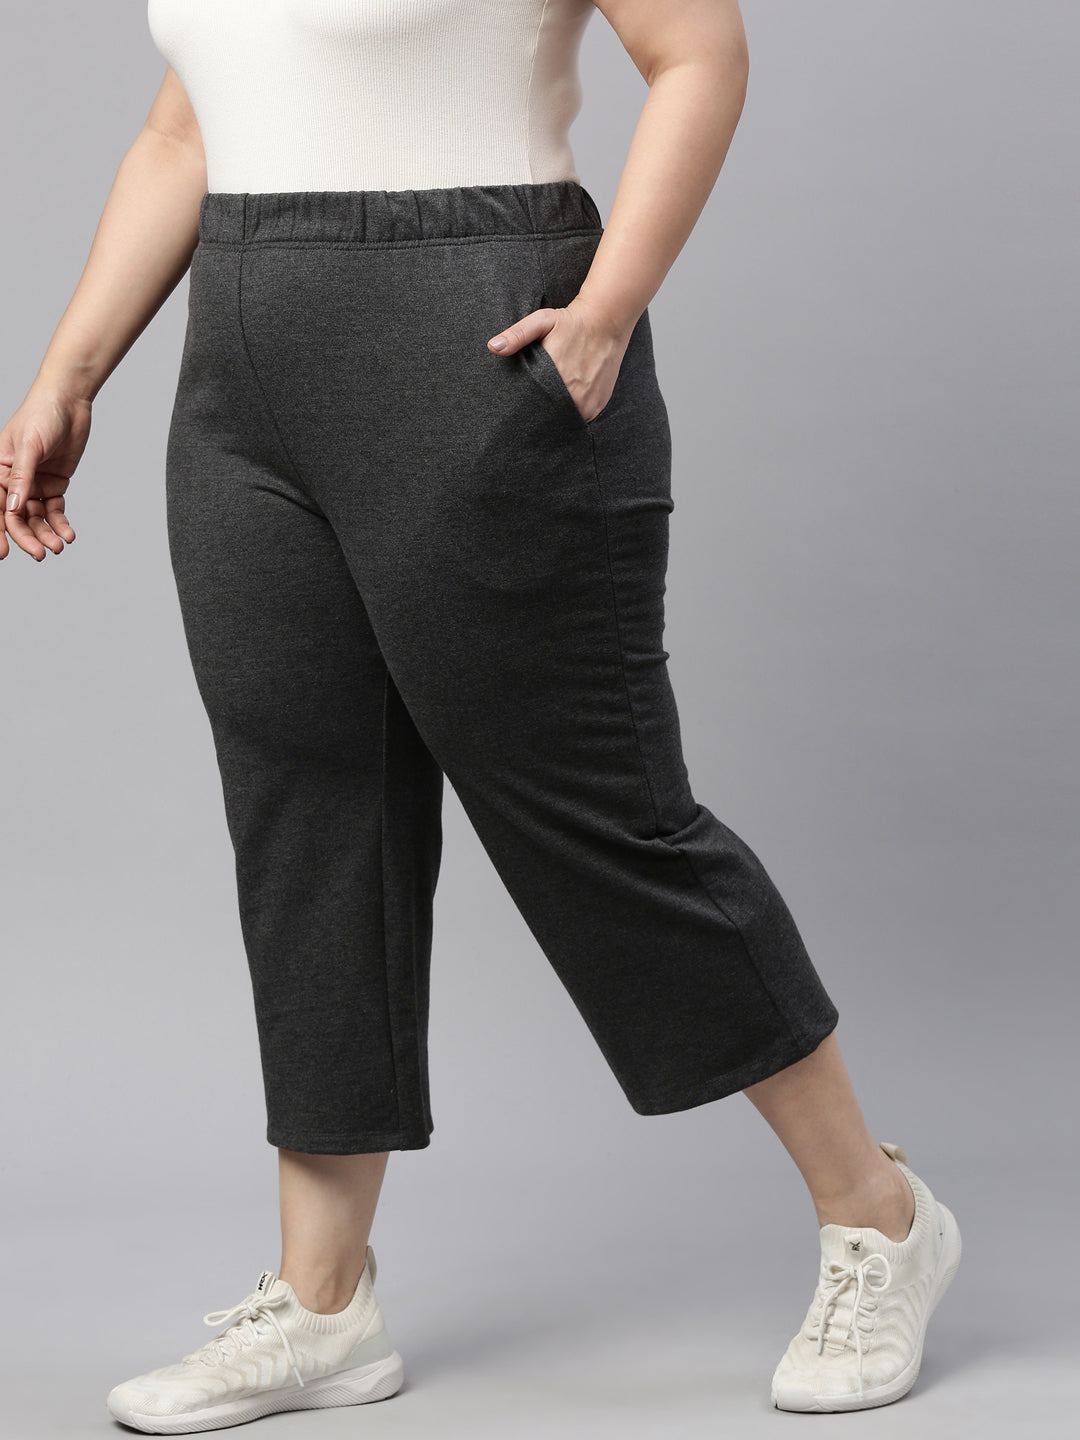 Women Capri Trousers Ladies Three Quarter Cropped Elasticated Soft Summer  Pants | eBay